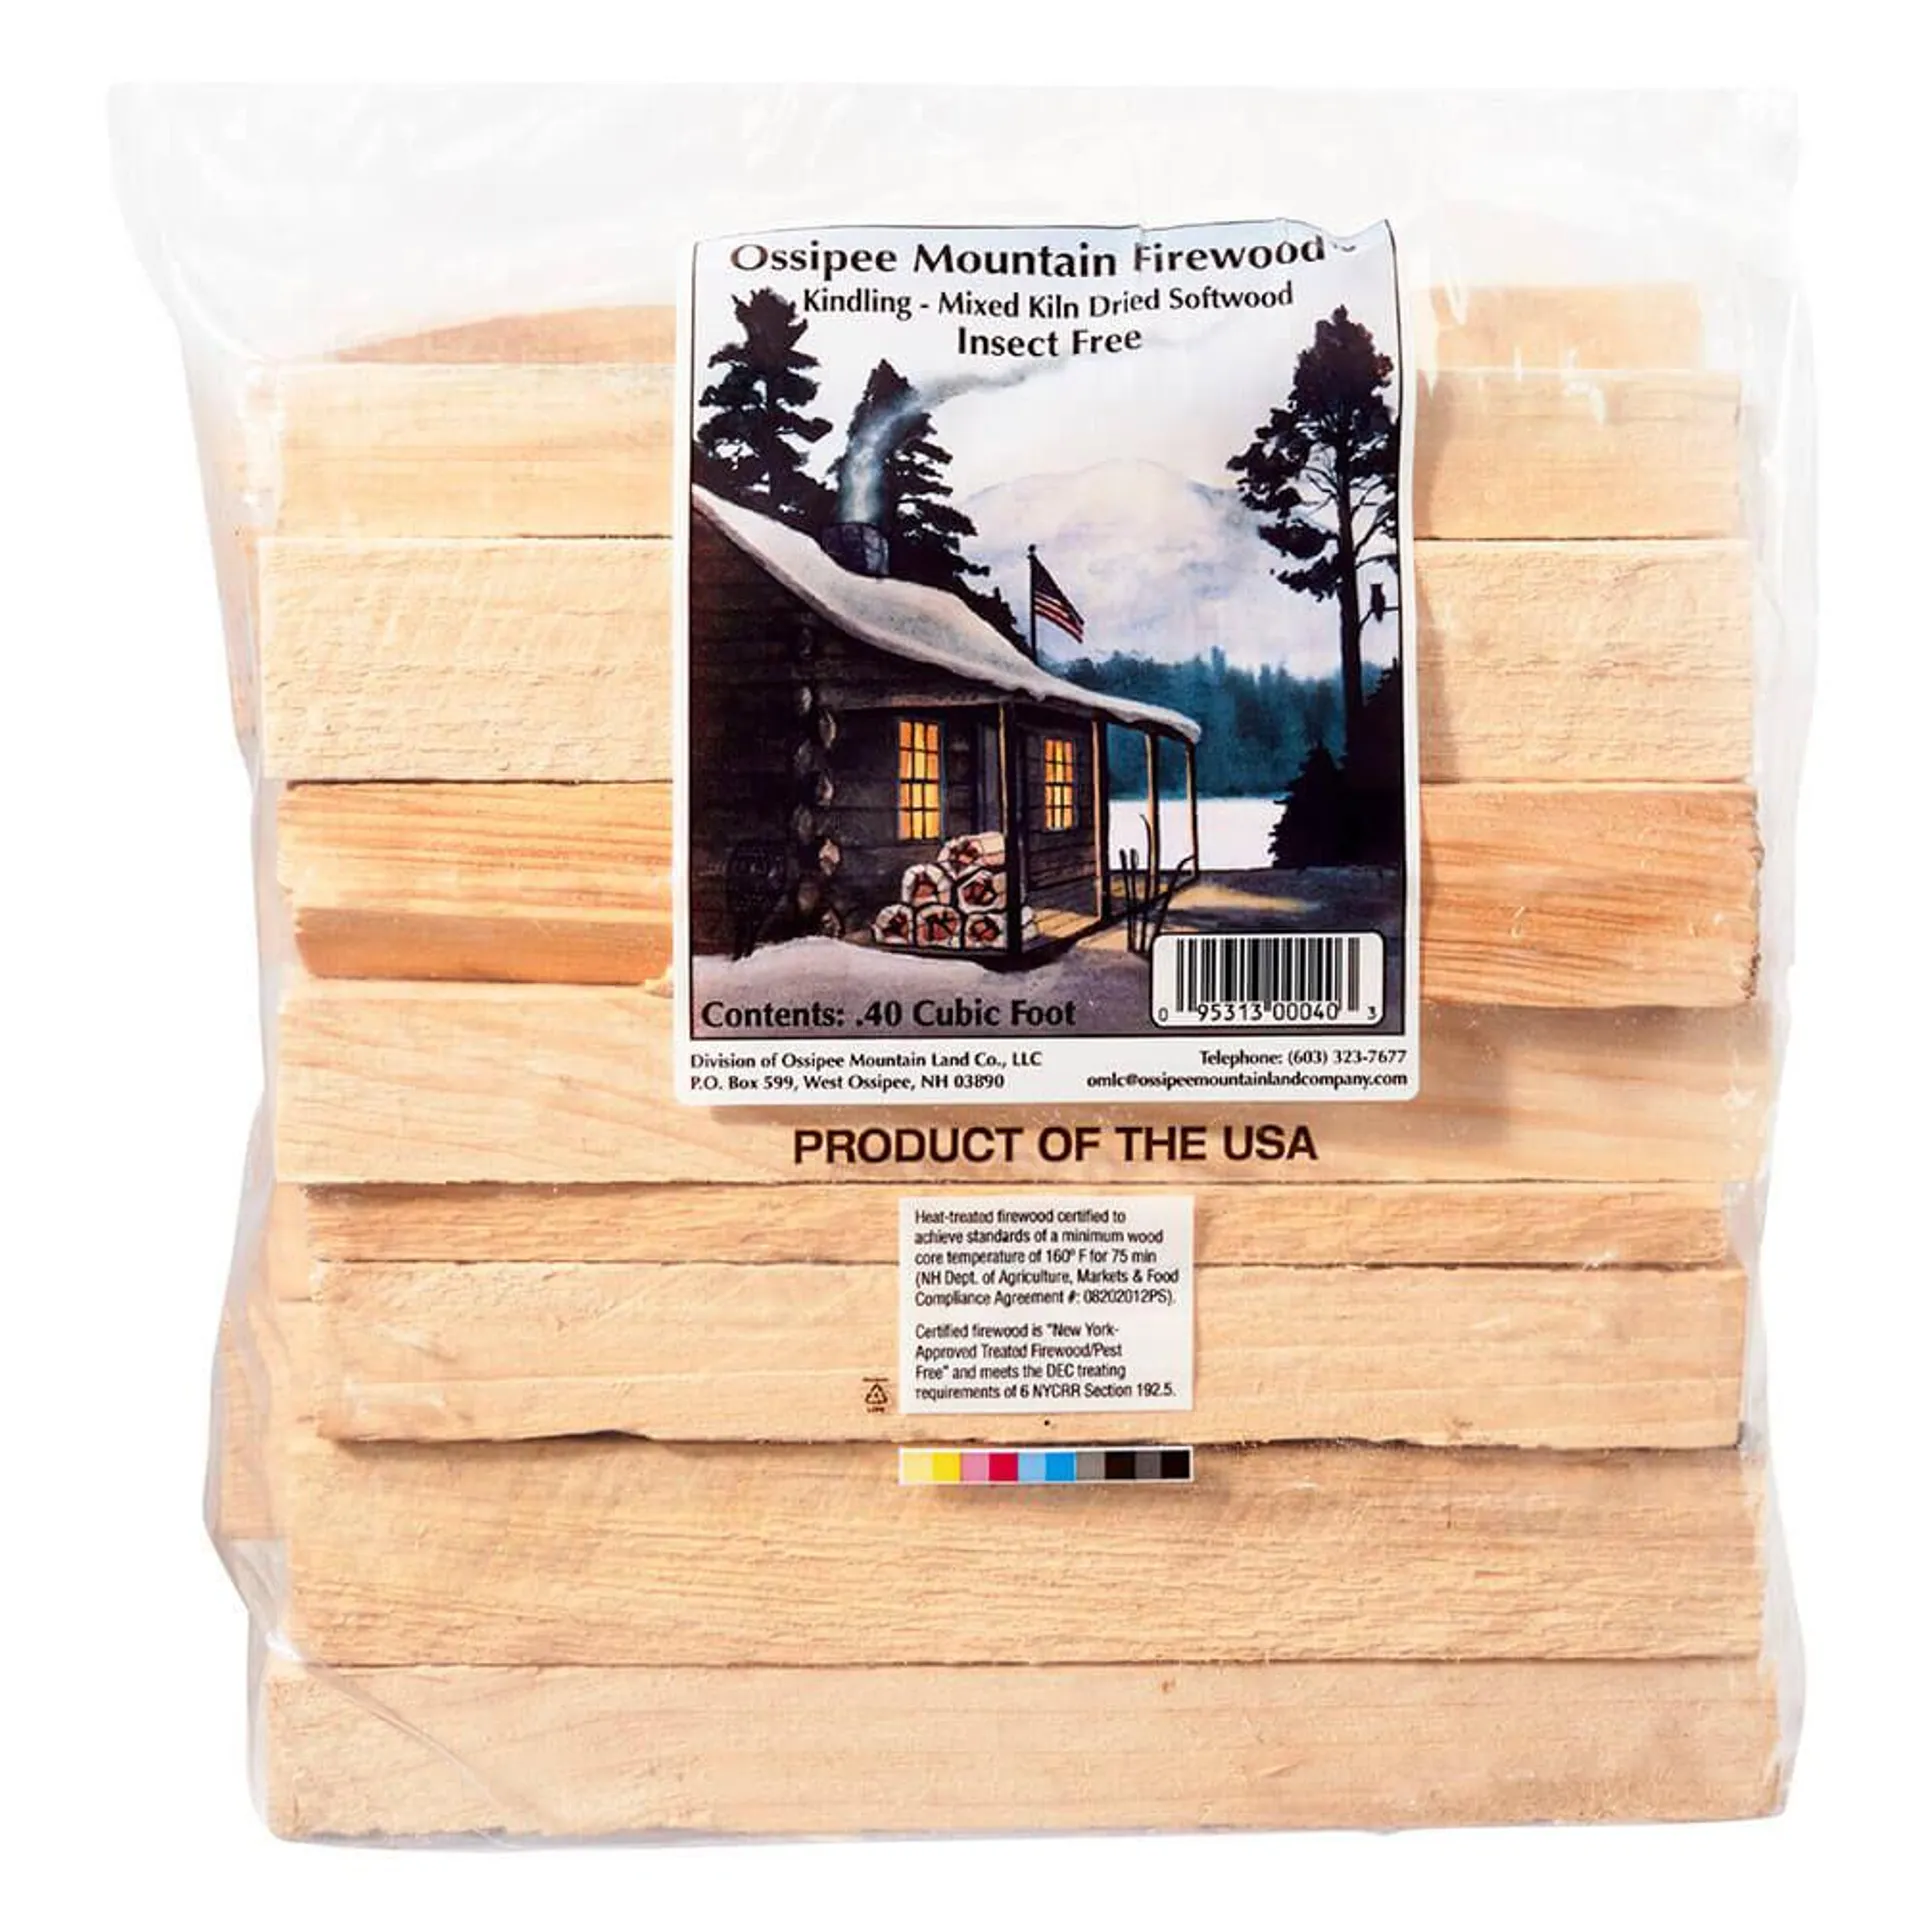 Ossipee Mountain Firewood Kindling